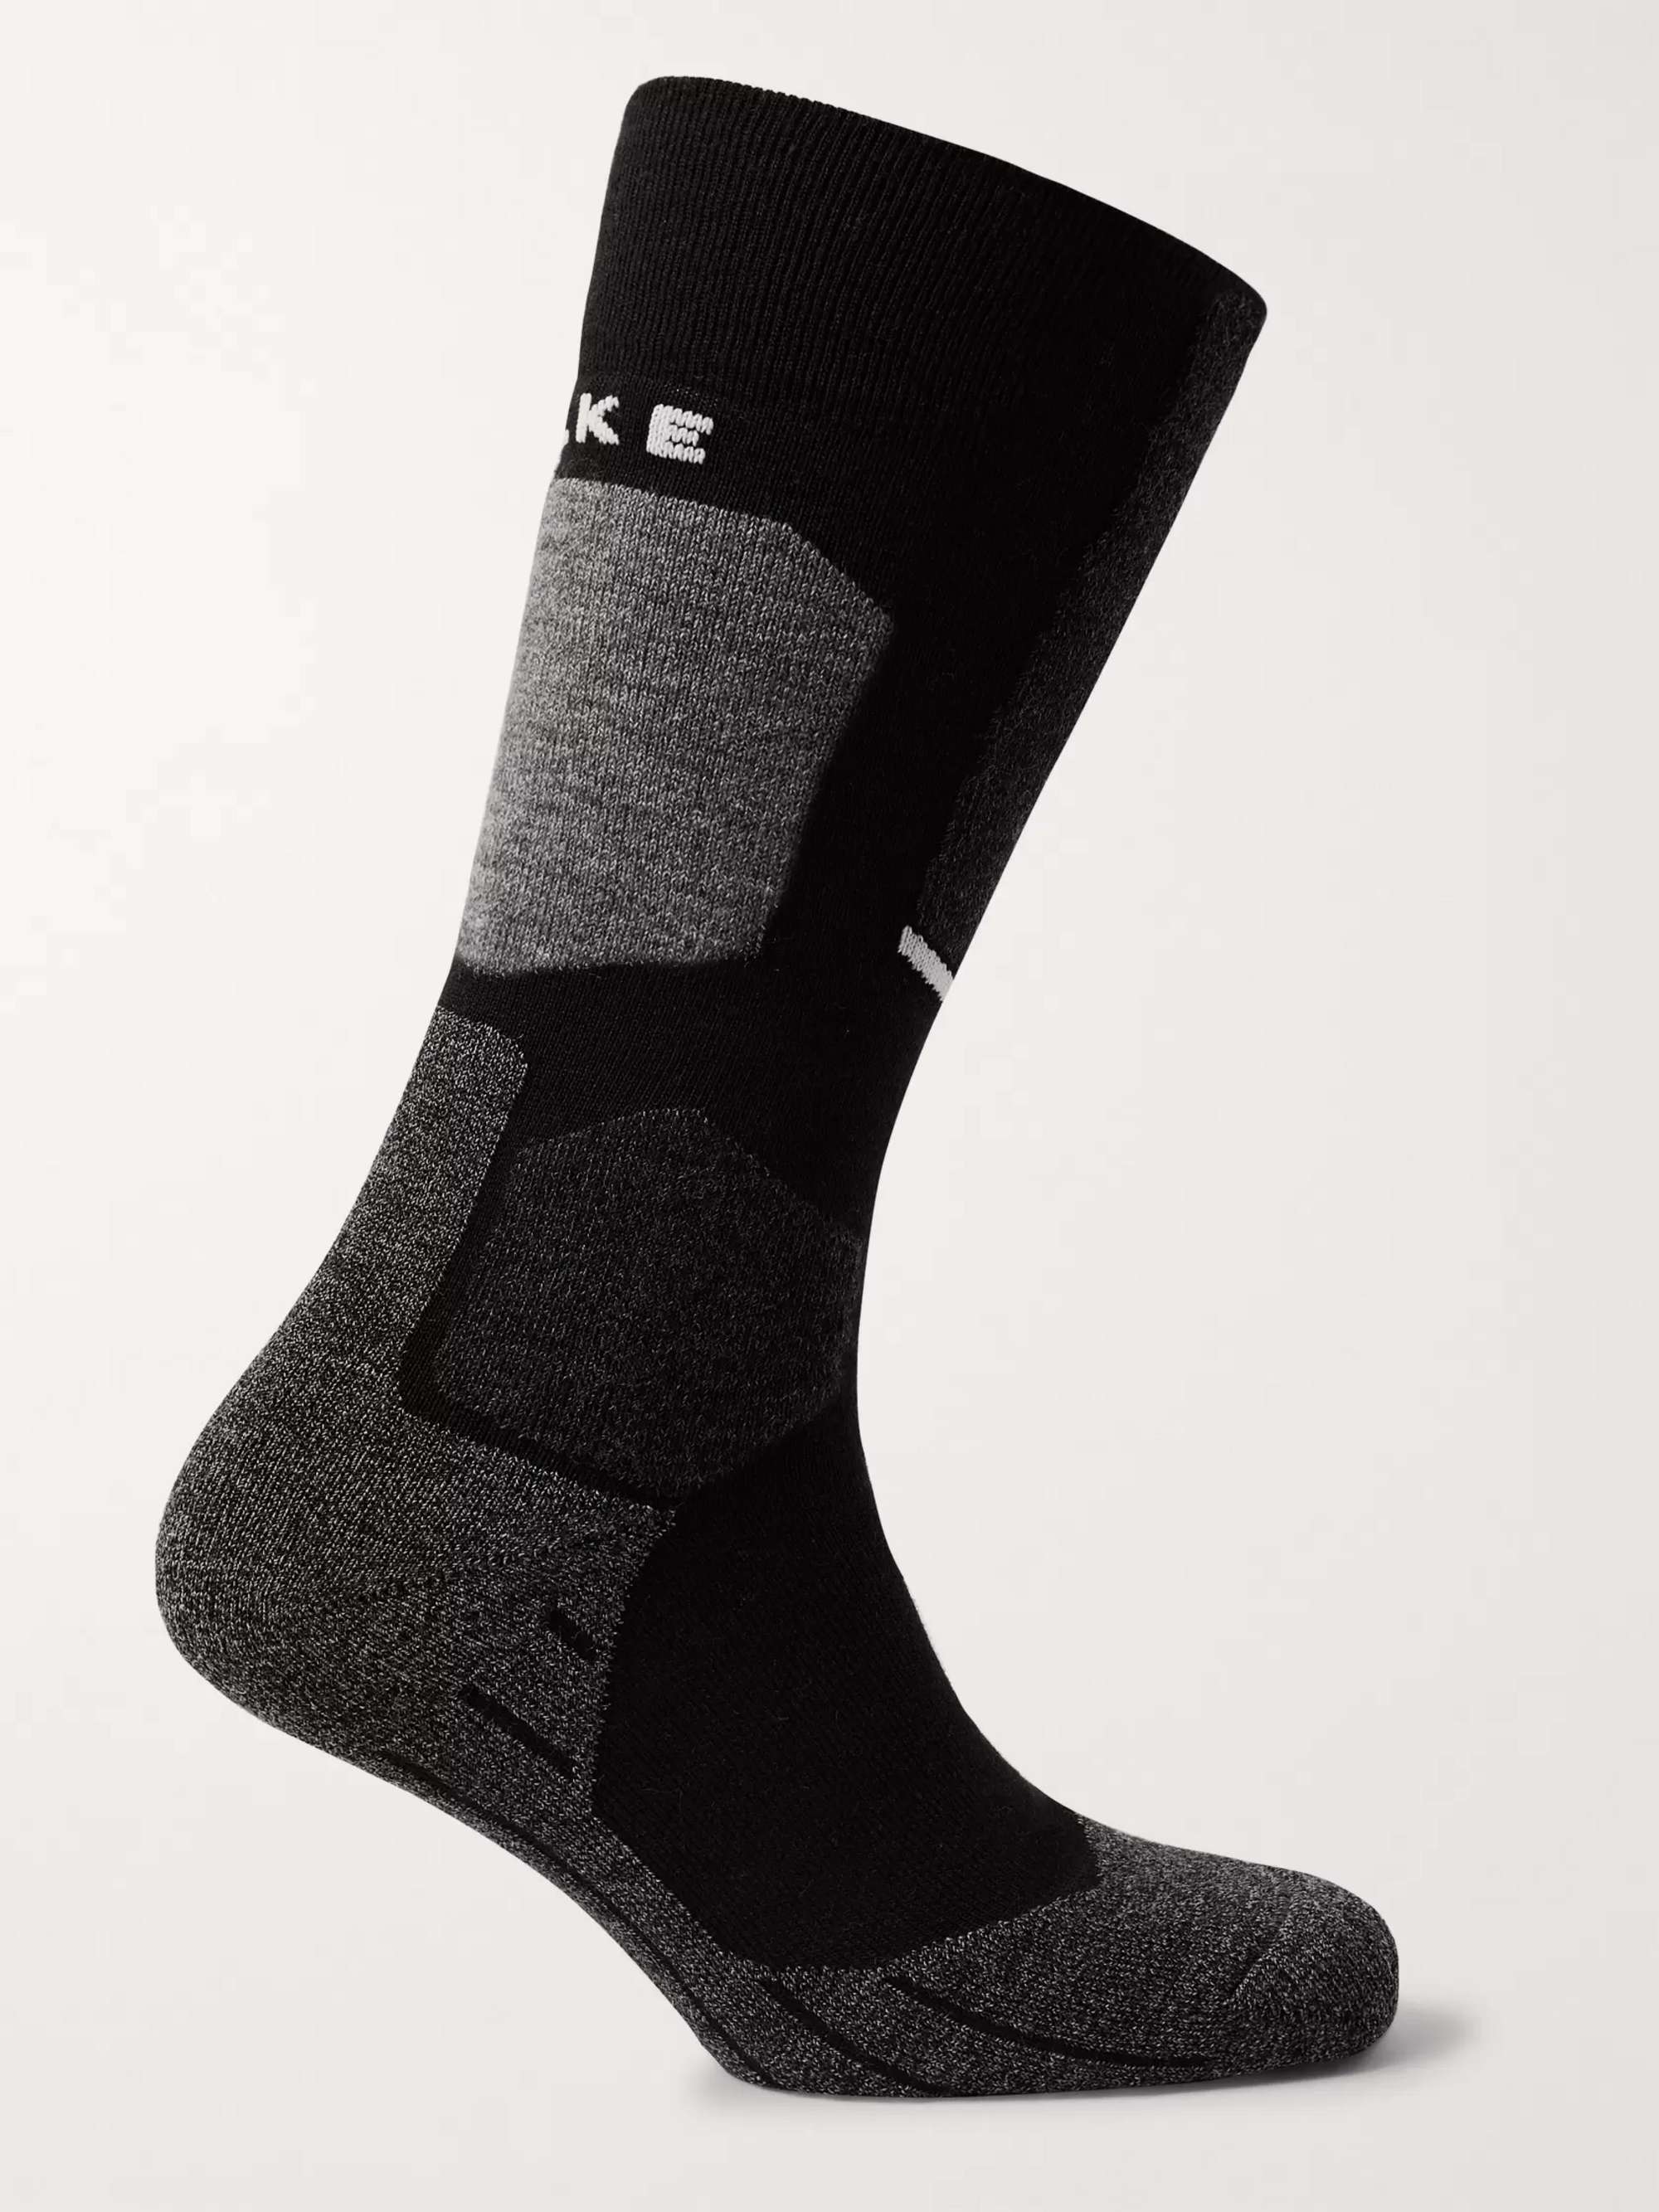 FALKE ERGONOMIC SPORT SYSTEM SK2 Stretch-Knit Ski Socks